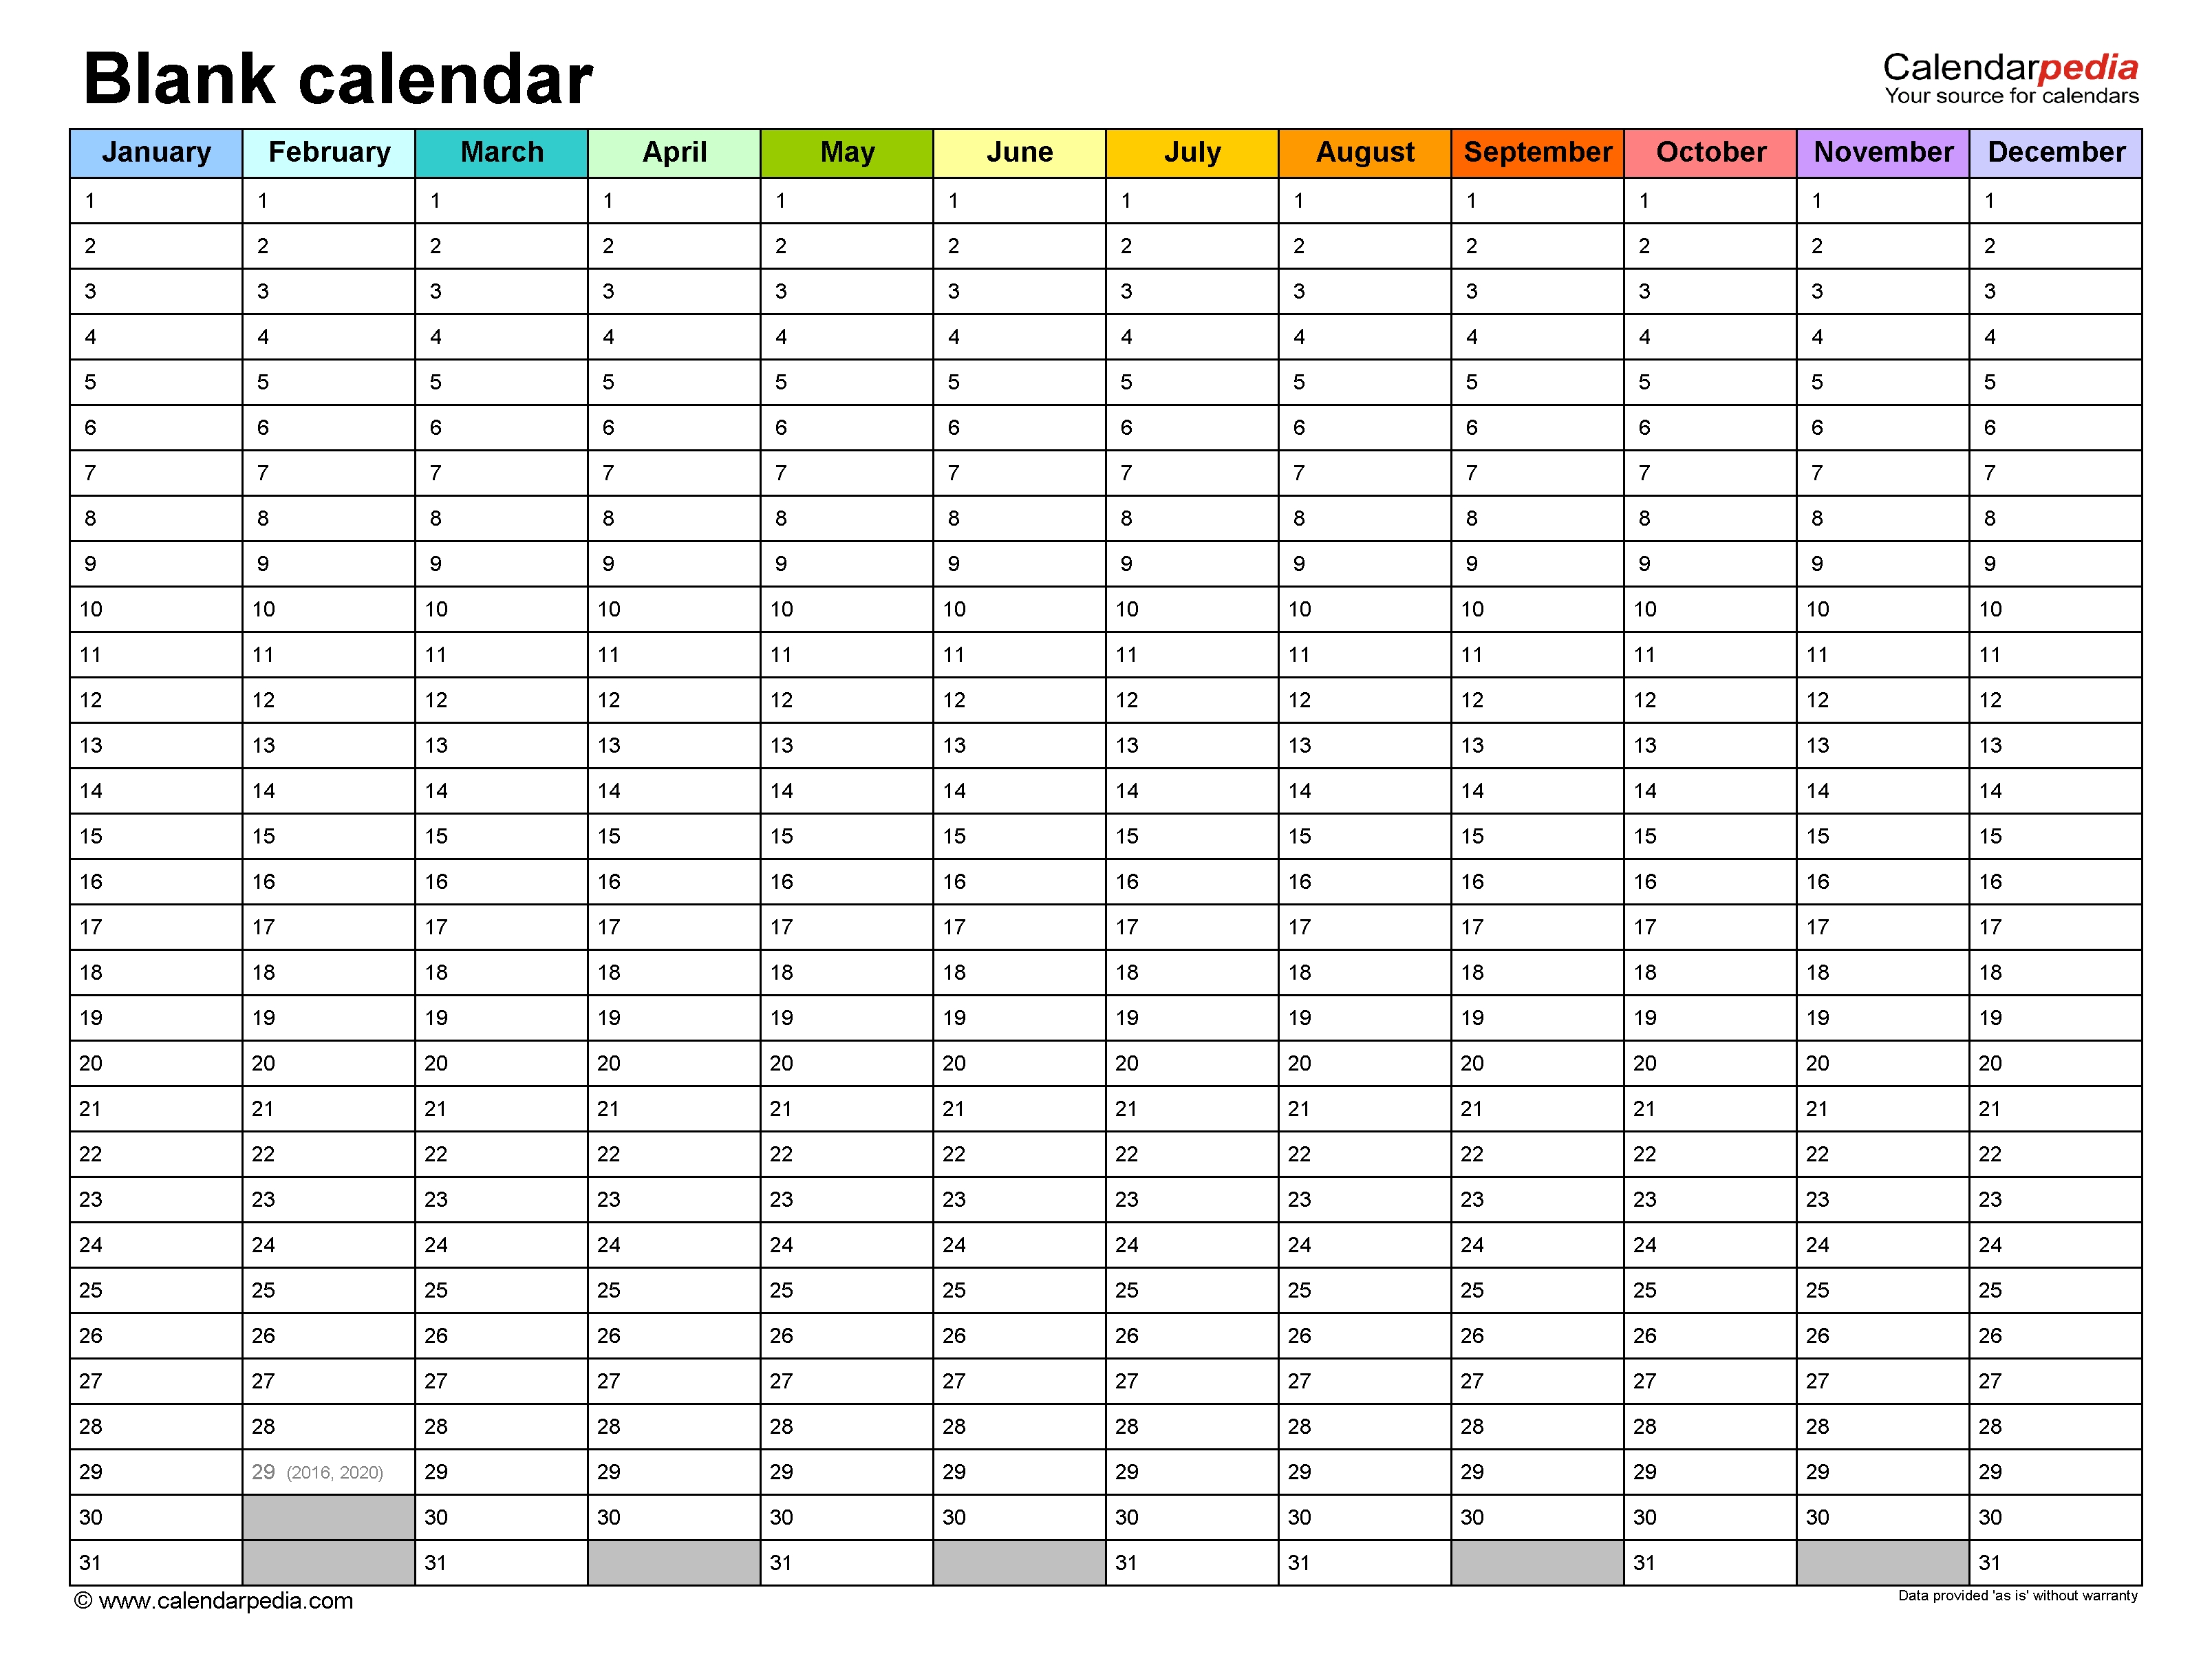 Blank Calendars - Free Printable Microsoft Word Templates A Yearly Calendar Template